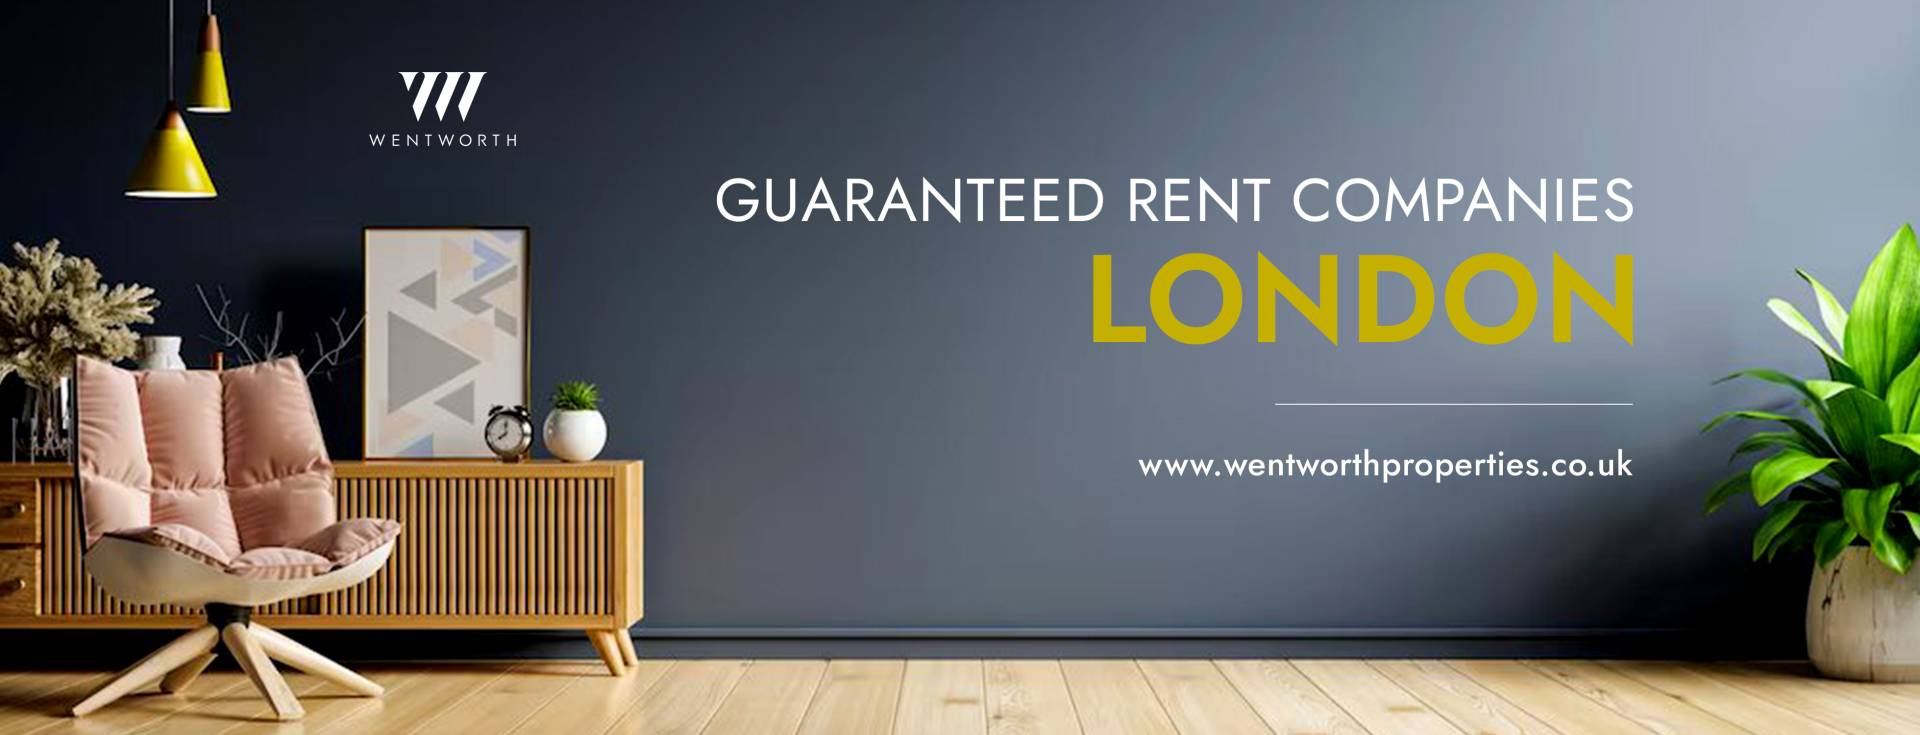 Guaranteed rent companies london